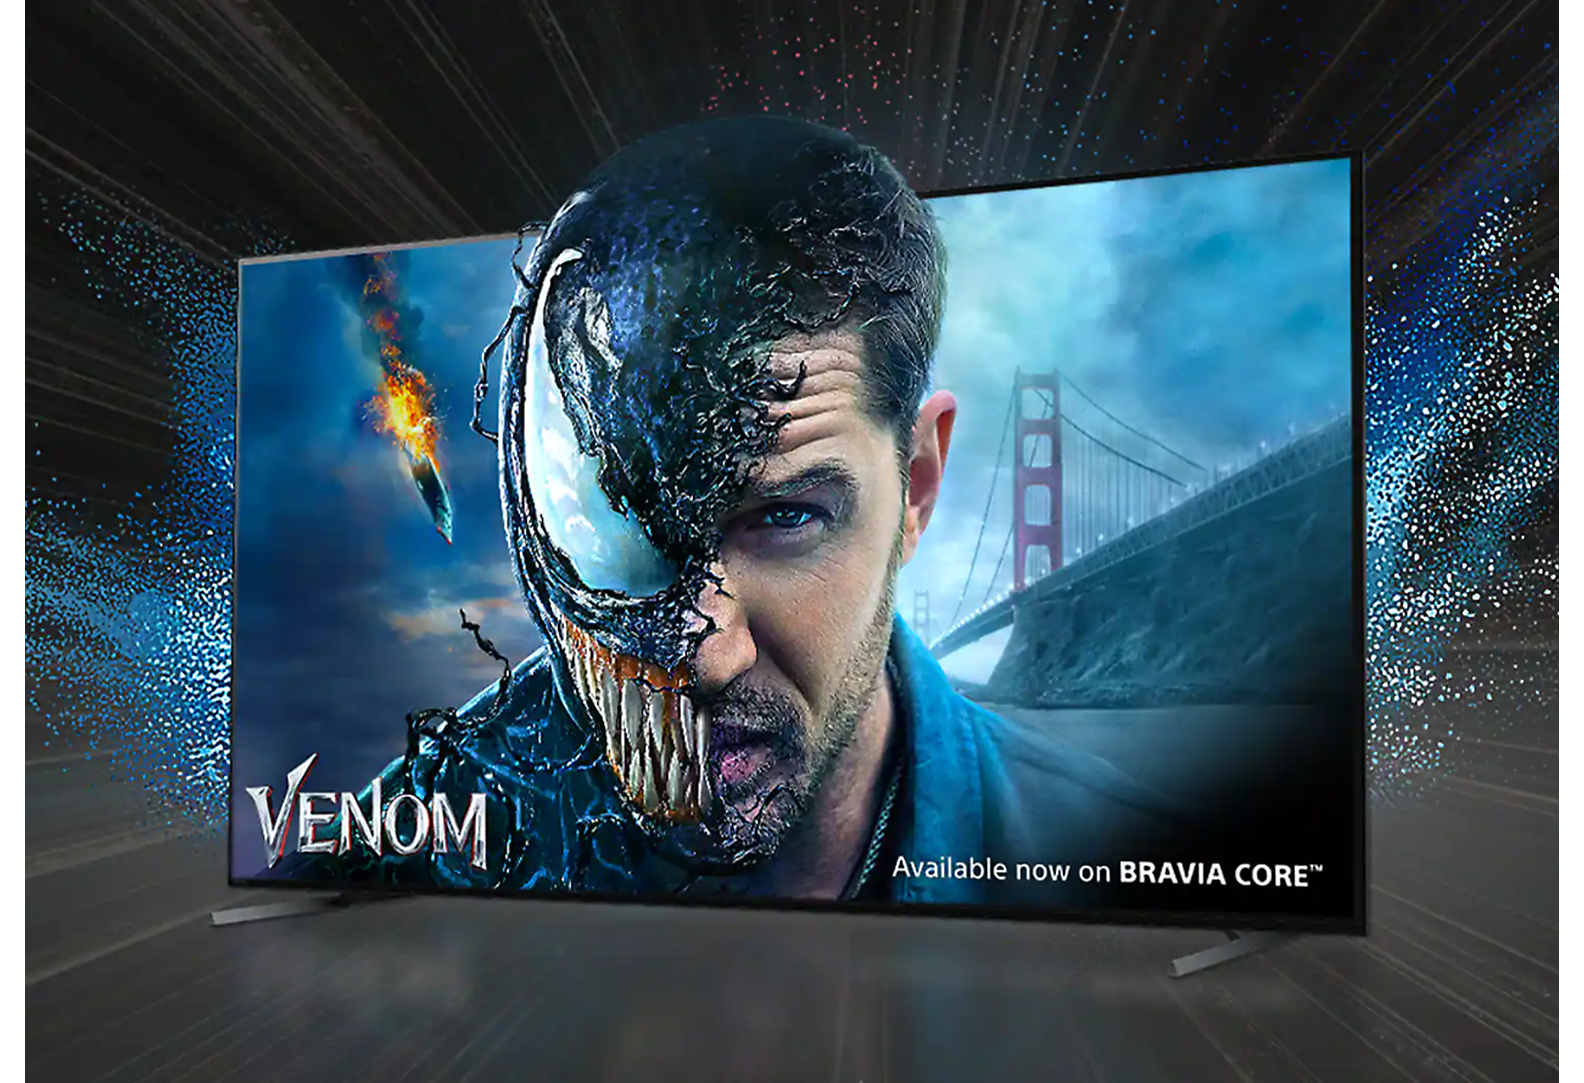 BRAVIA TV with Venom on screen